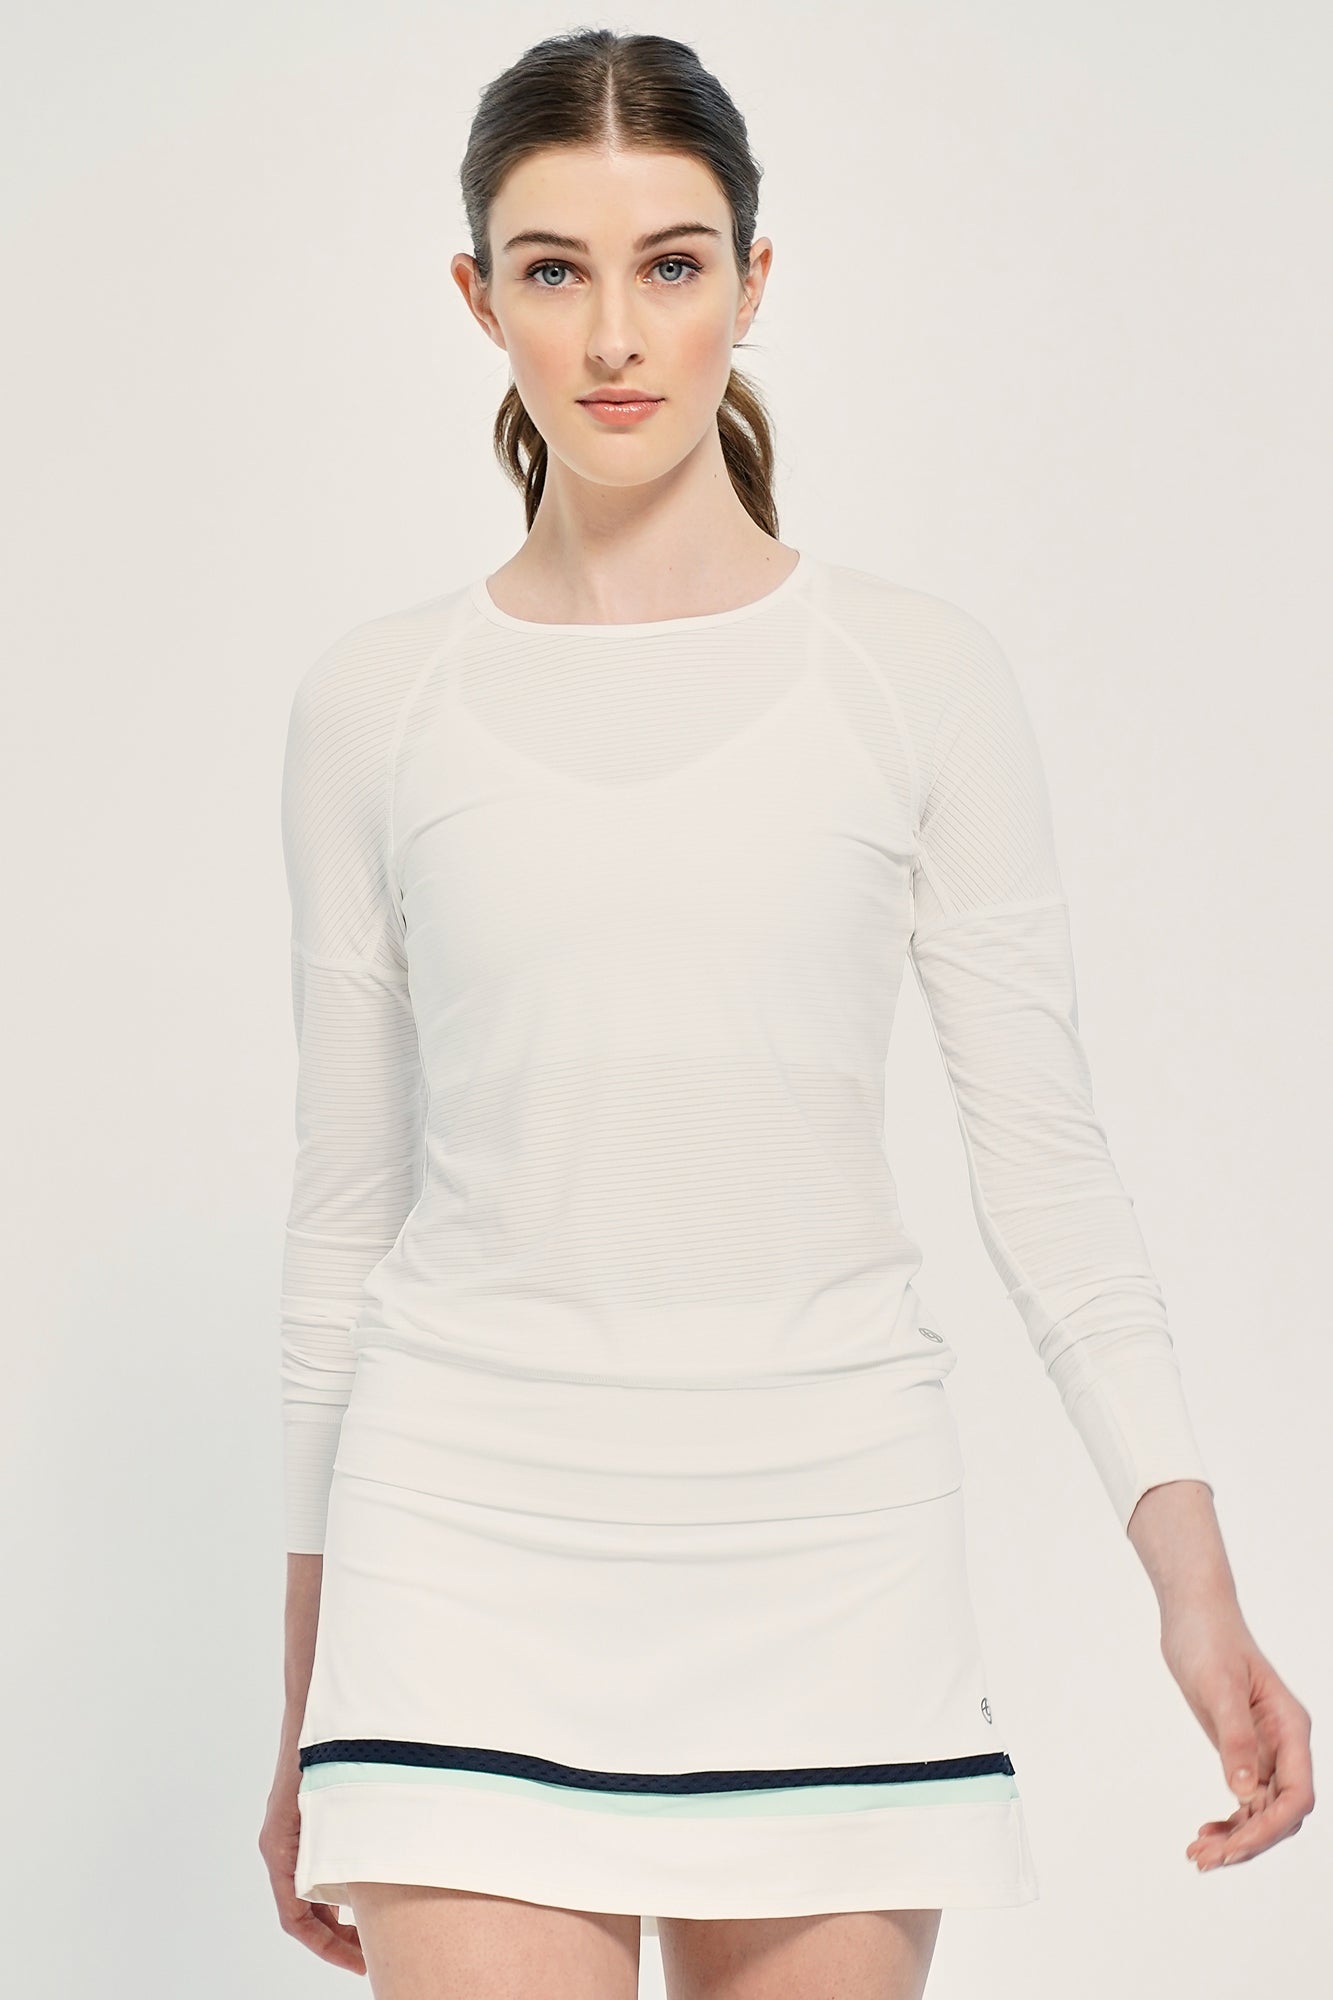 LIJA New Stripe Slay Long Sleeve (Women's)- White